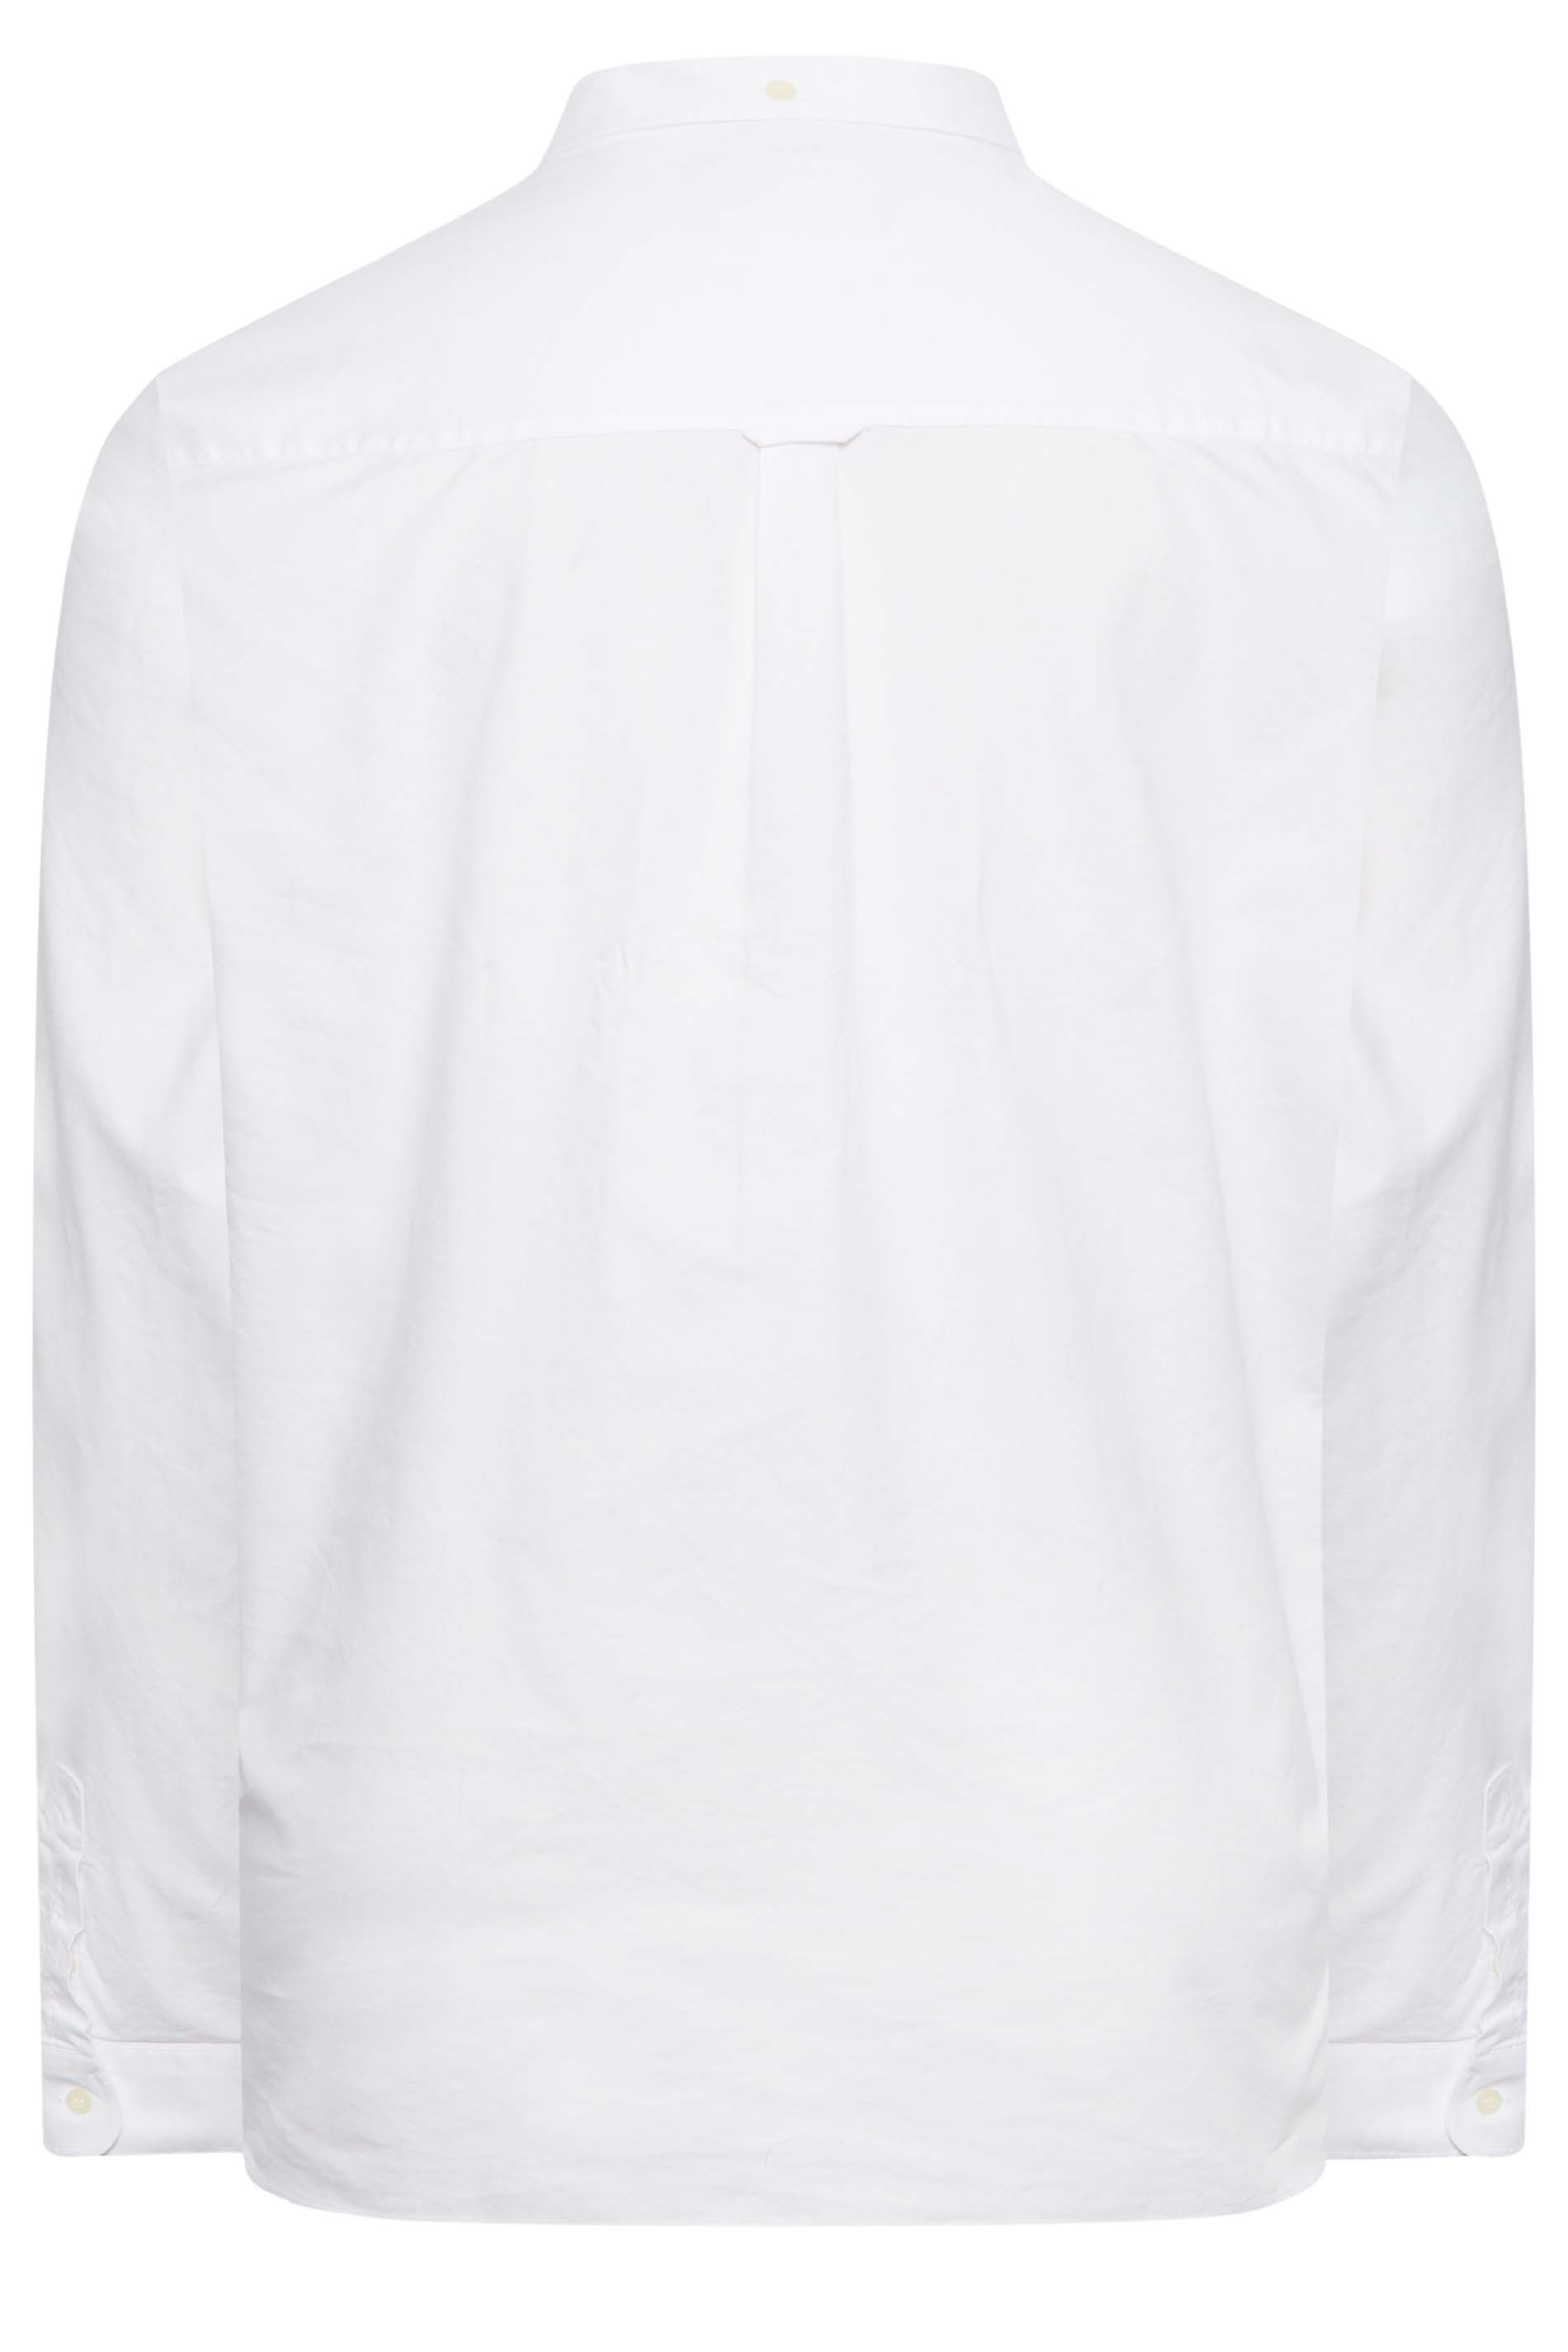 LYLE & SCOTT Big & Tall White Oxford Shirt | BadRhino